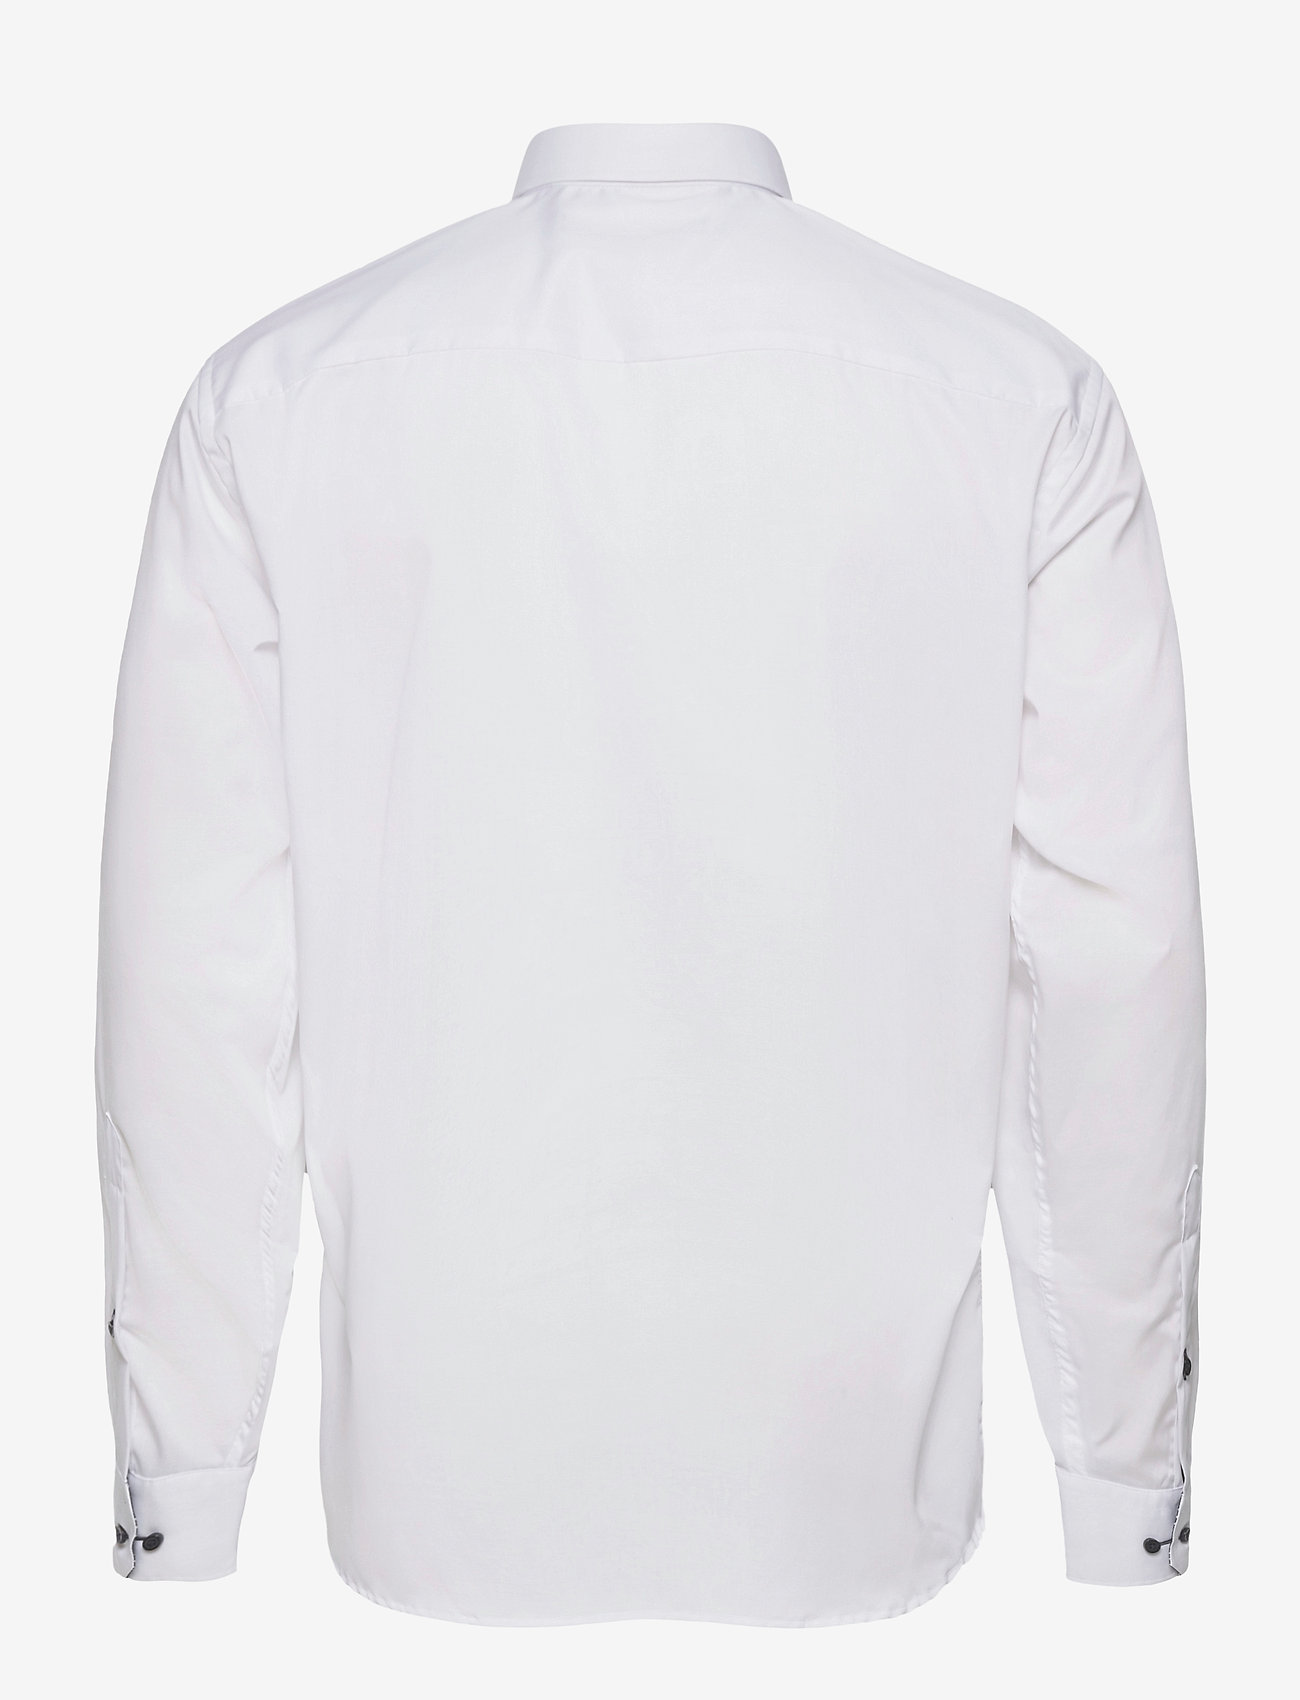 Bosweel Shirts Est. 1937 - Twill with contrast Black - koszule smokingowe - white - 1